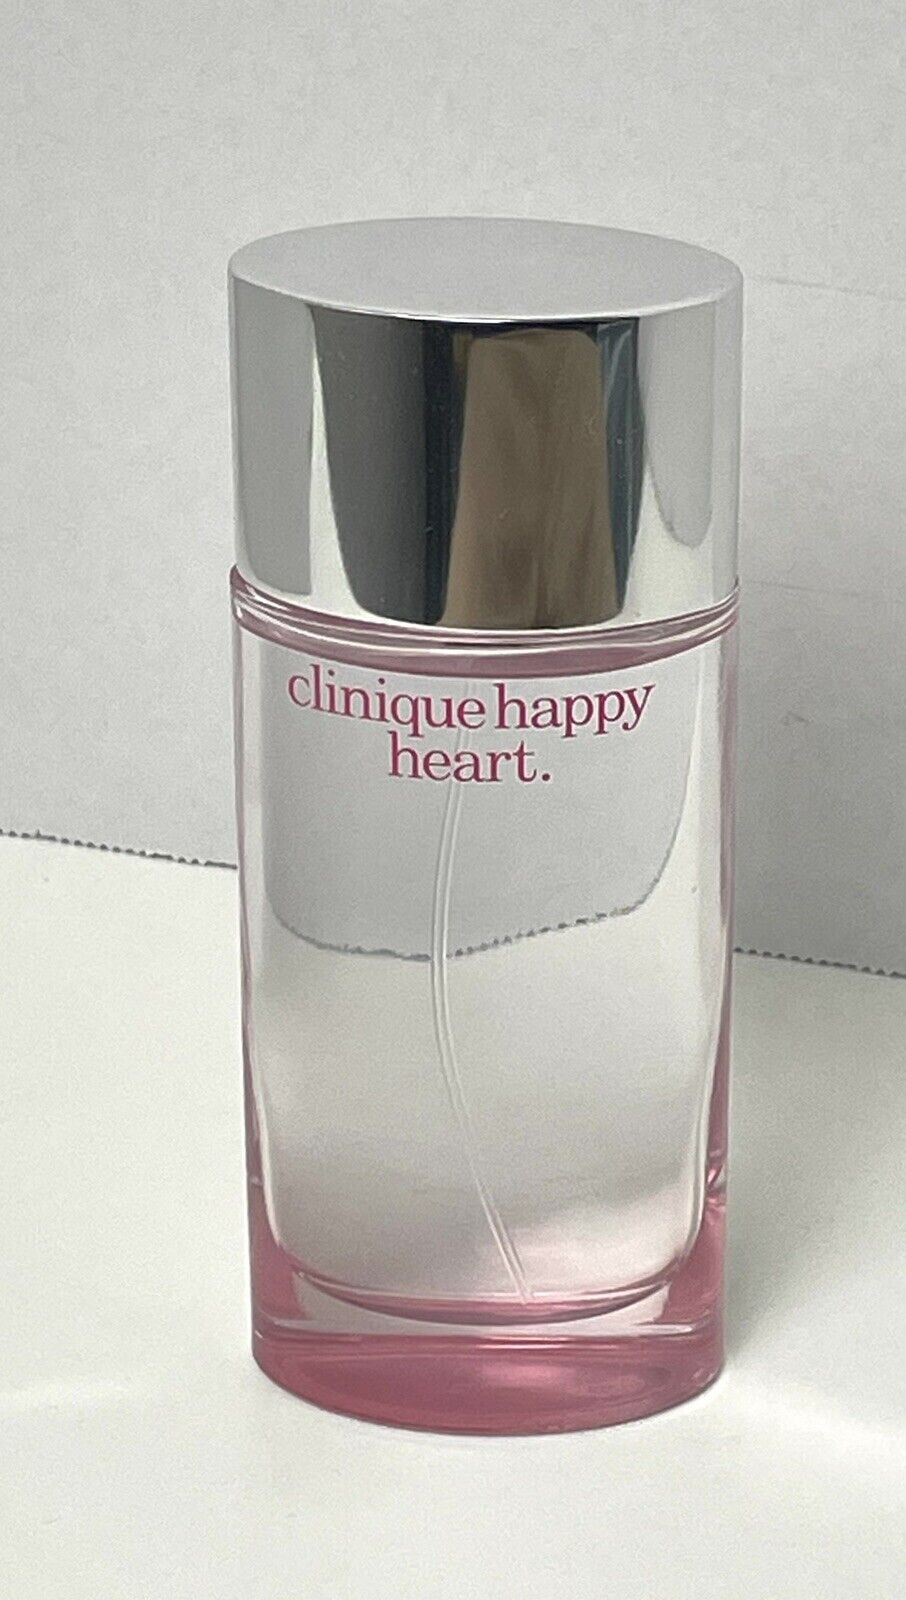 Clinique Happy Heart Women's Parfum Perfume Spray 3.4 oz NEW